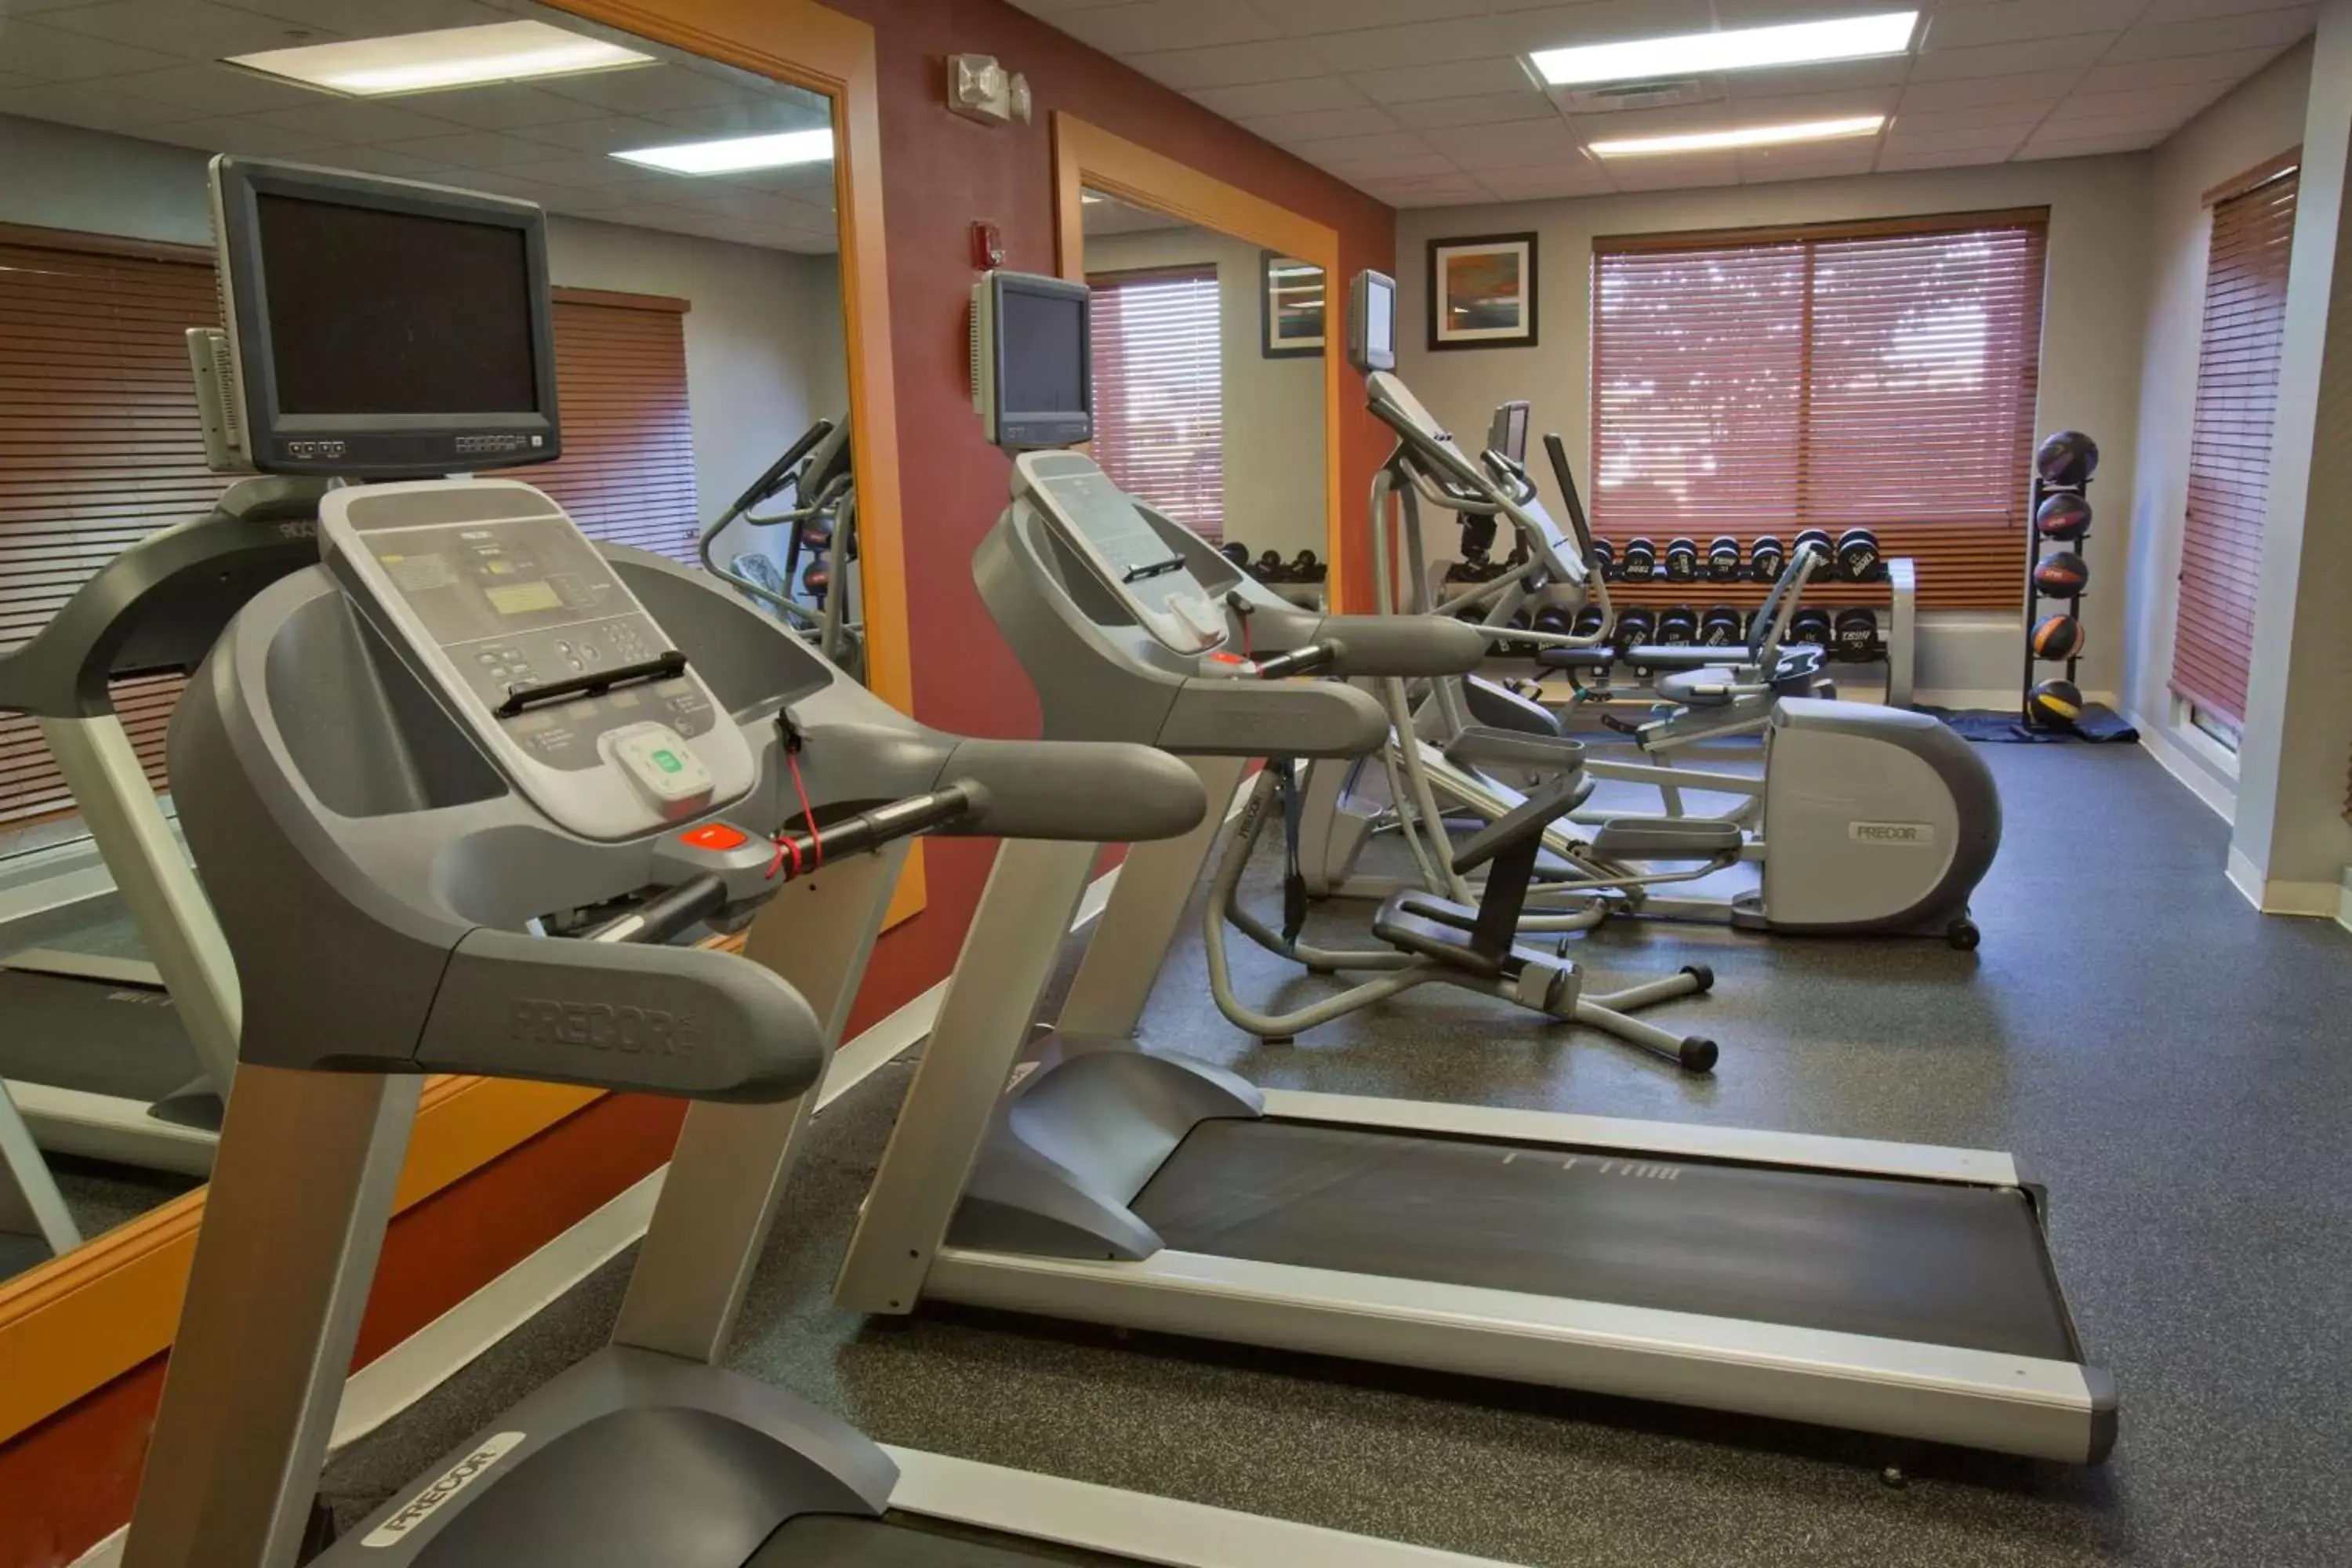 Fitness centre/facilities, Fitness Center/Facilities in Hilton Garden Inn Starkville